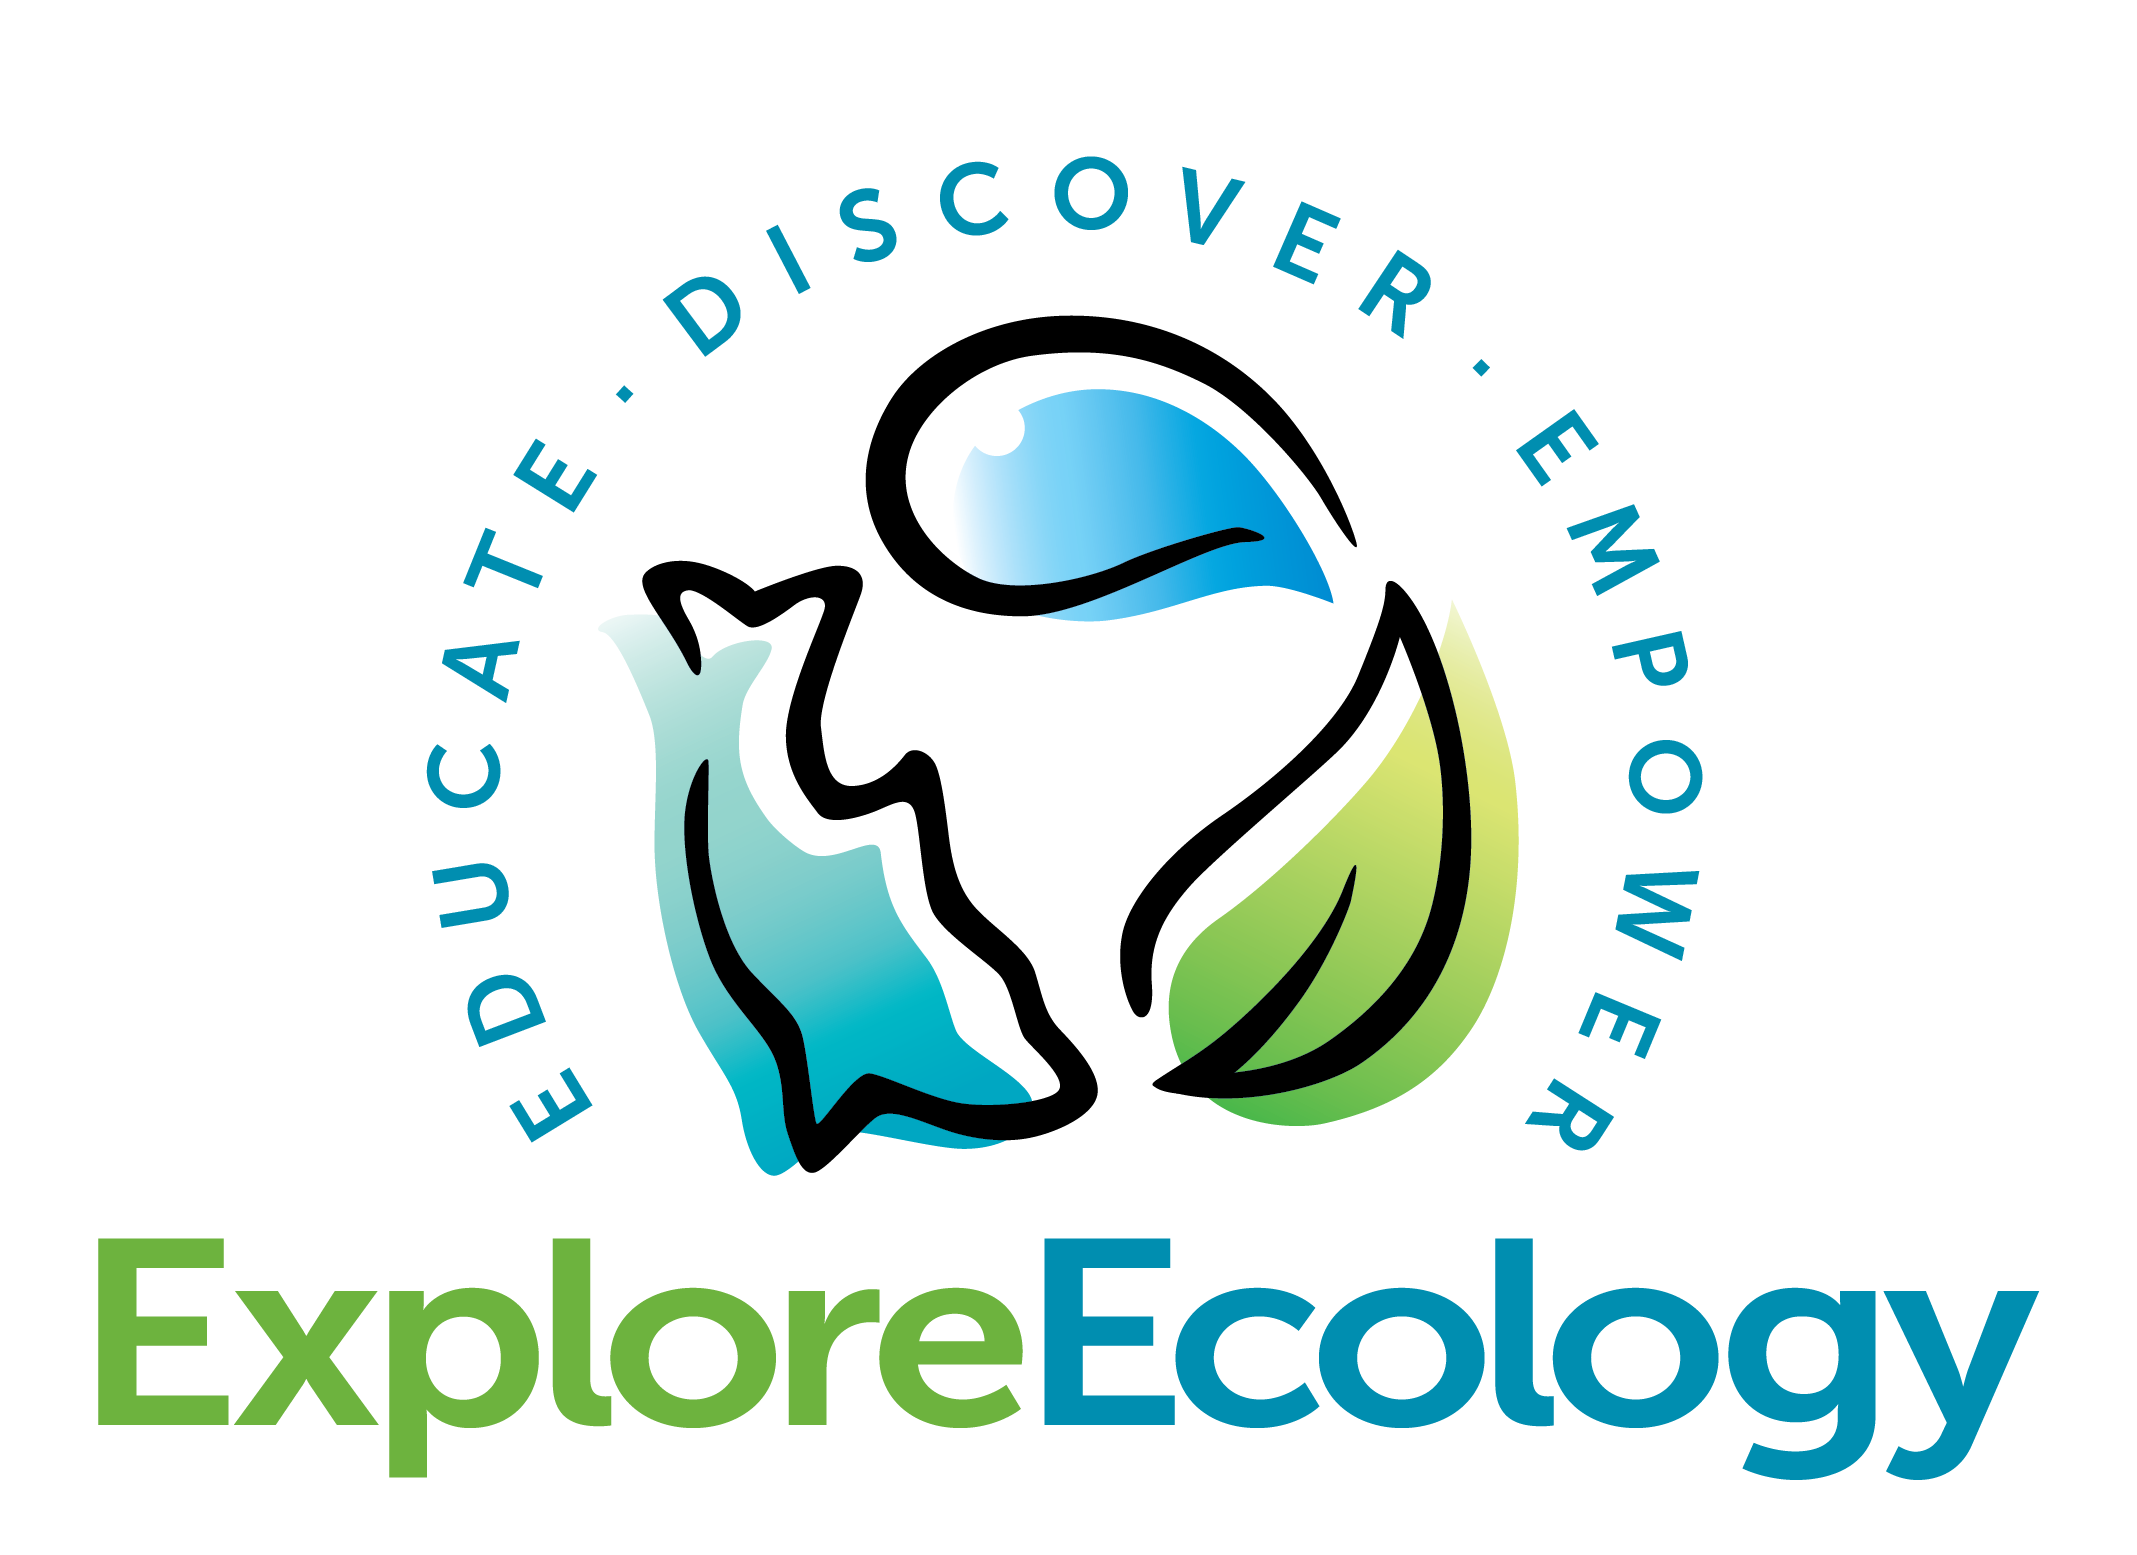 Text ecology. Эмблема экологии. Экология логотип. Экологические бренды. Экологический бренд эмблема.